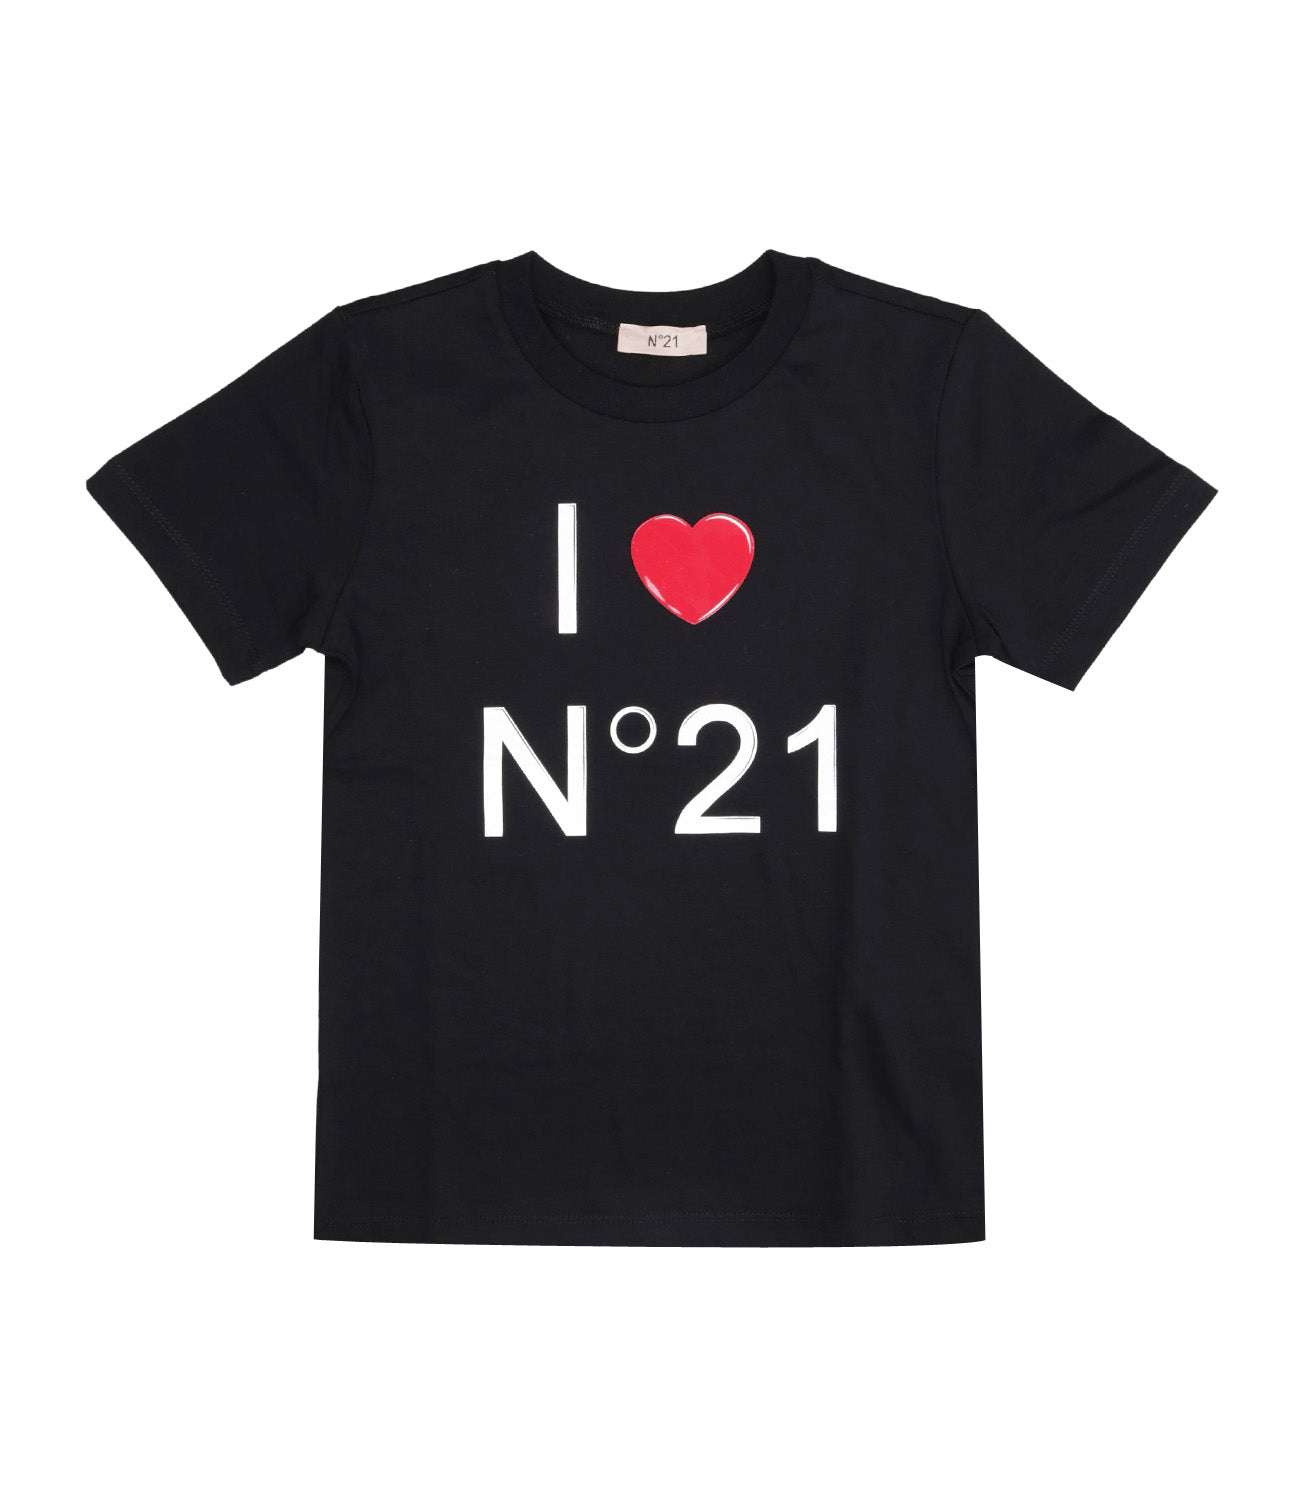 N 21 | Black T-Shirt